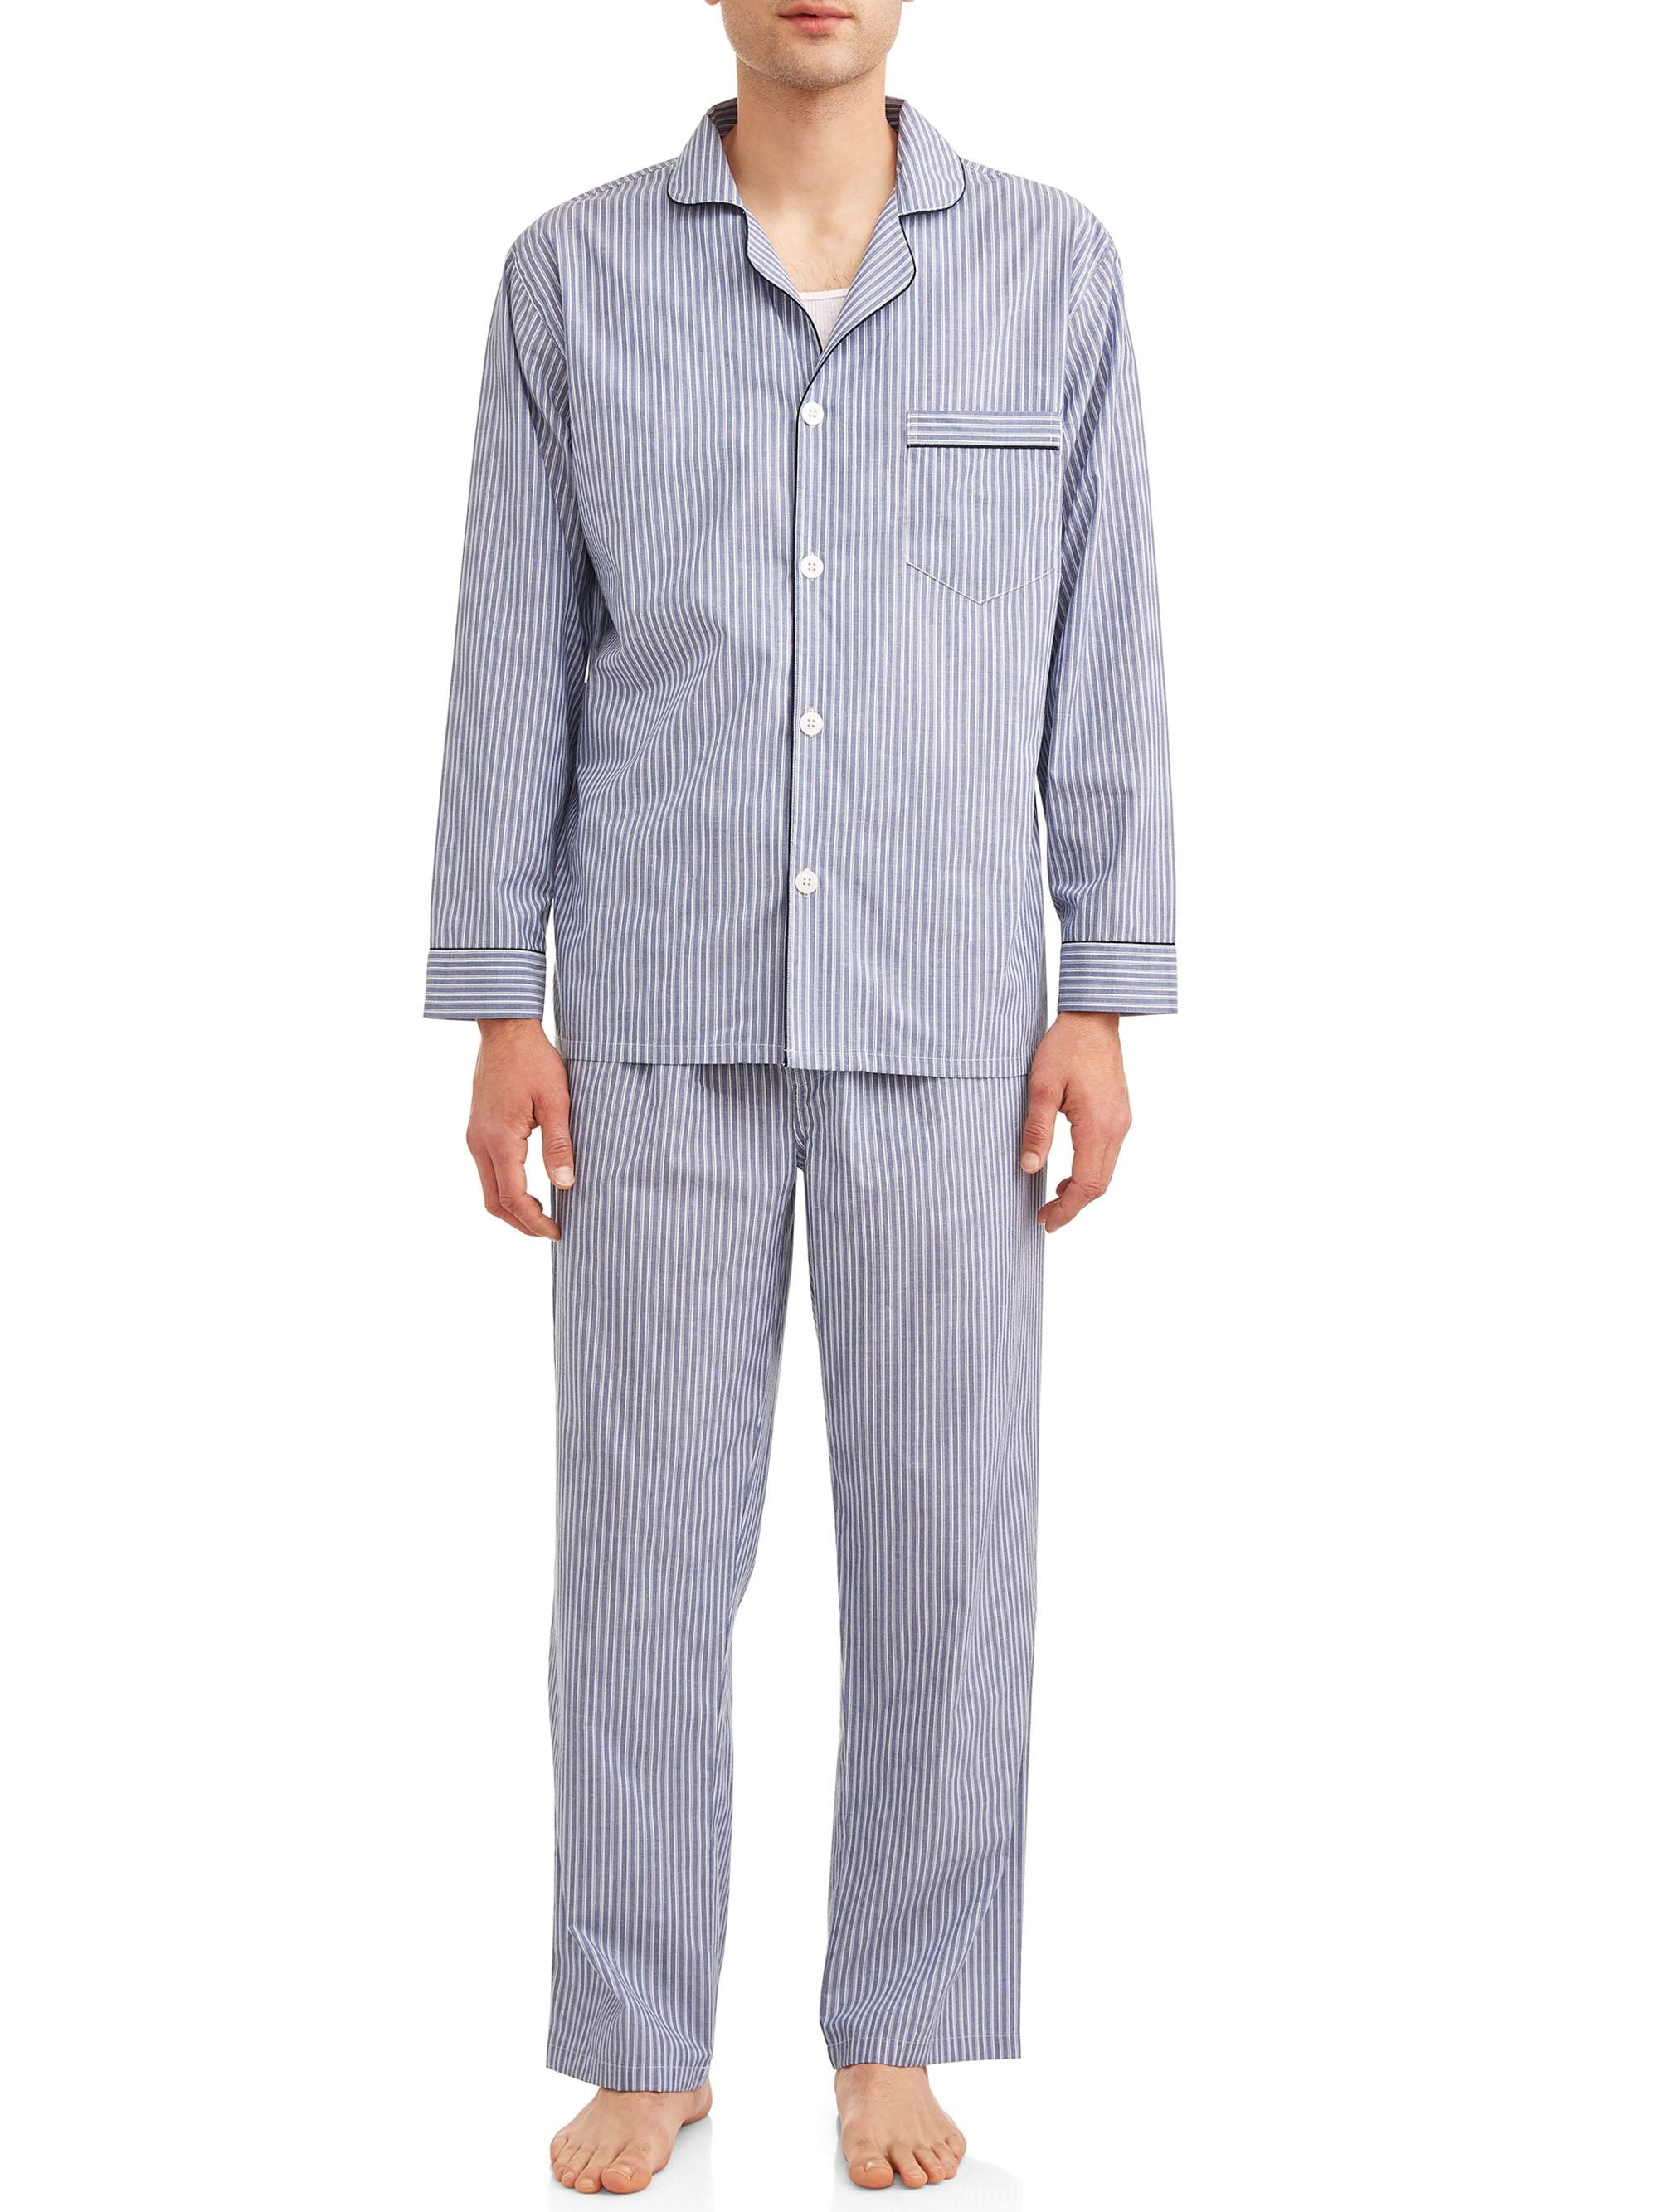 Hanes - Hanes Men's and Big Men's Long Sleeve, Long Pant Woven Pajama ...